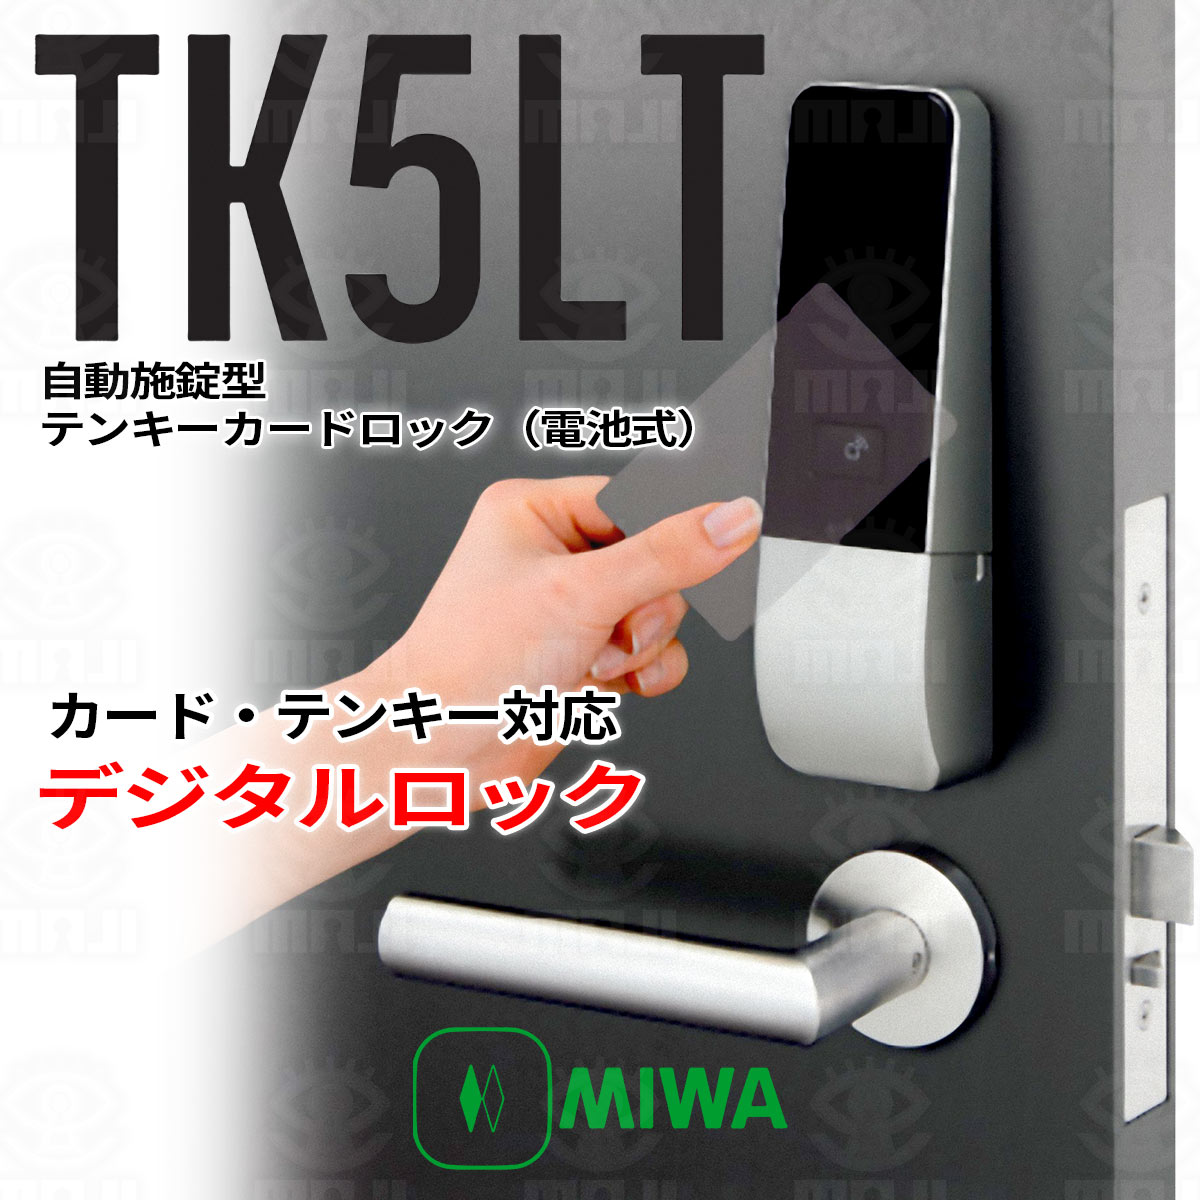 MIWA,美和ロック 自動施錠型テンキーカードロック(電池式) TK5LT